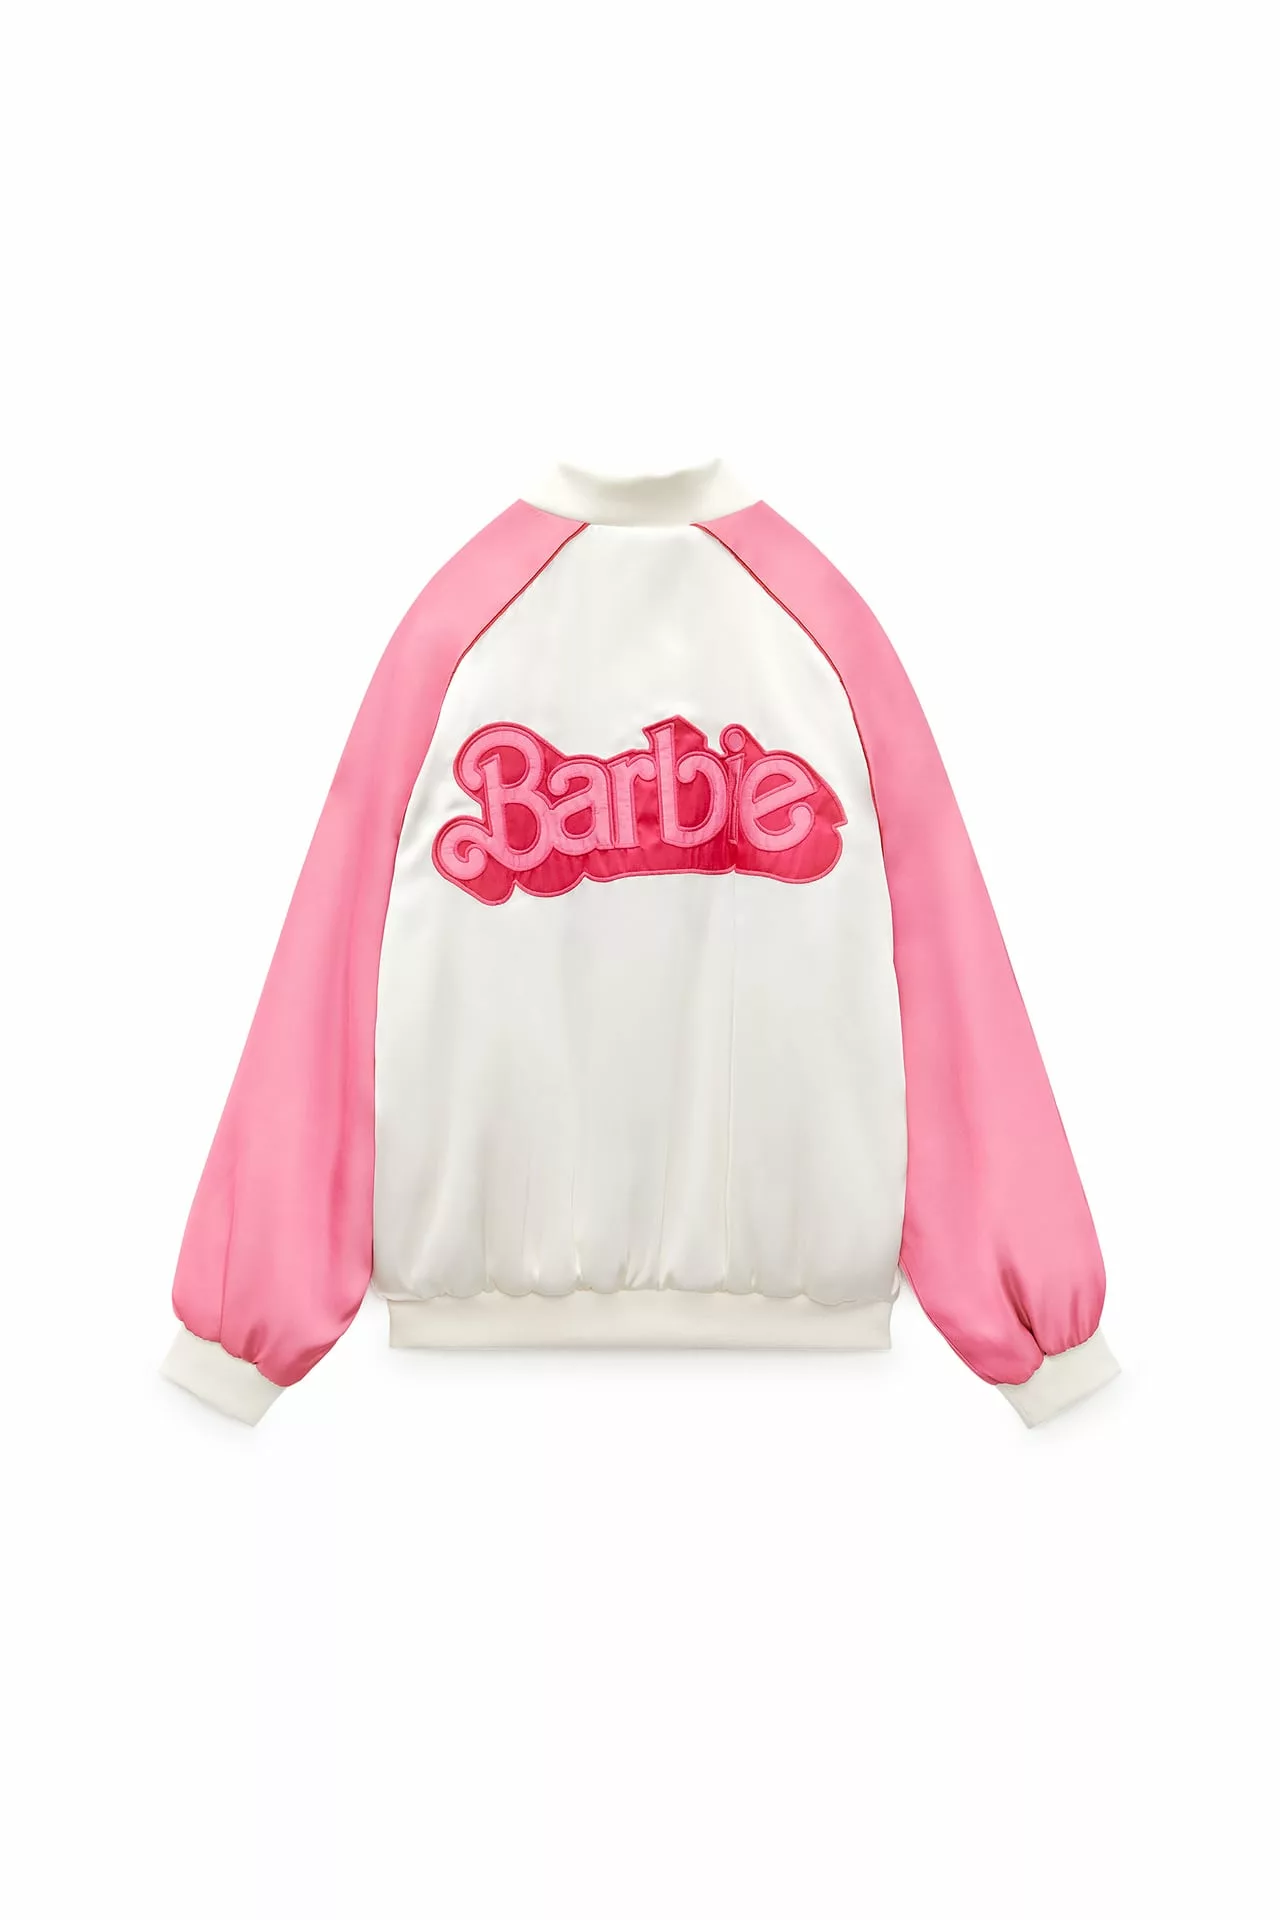 Barbie-Themed Merchandise From Zara, Crocs, Superga & More